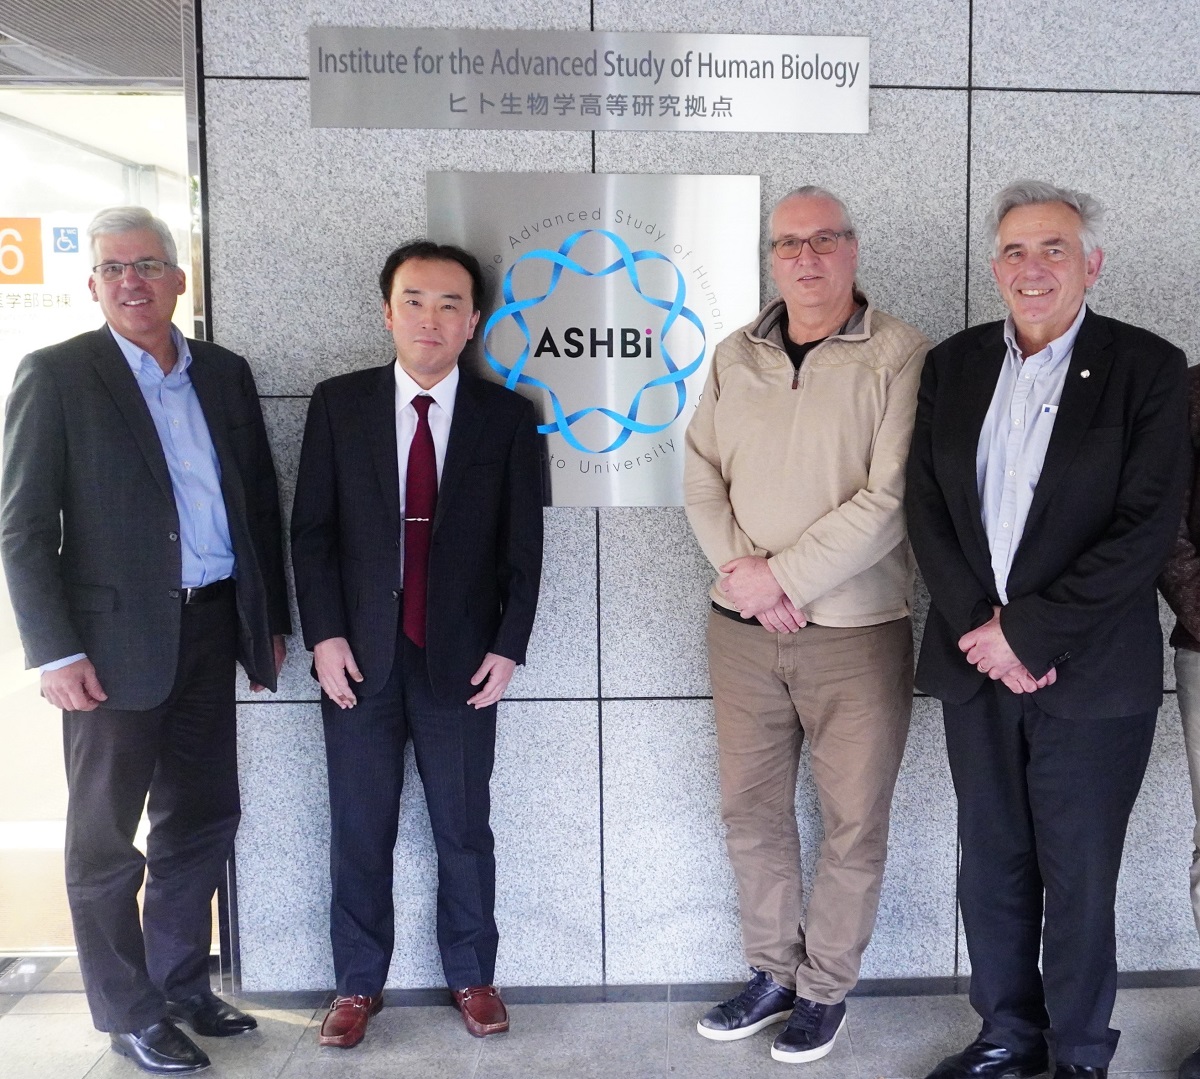 Lon Cardon, President and CEO, The Jackson Laboratory visited ASHBi